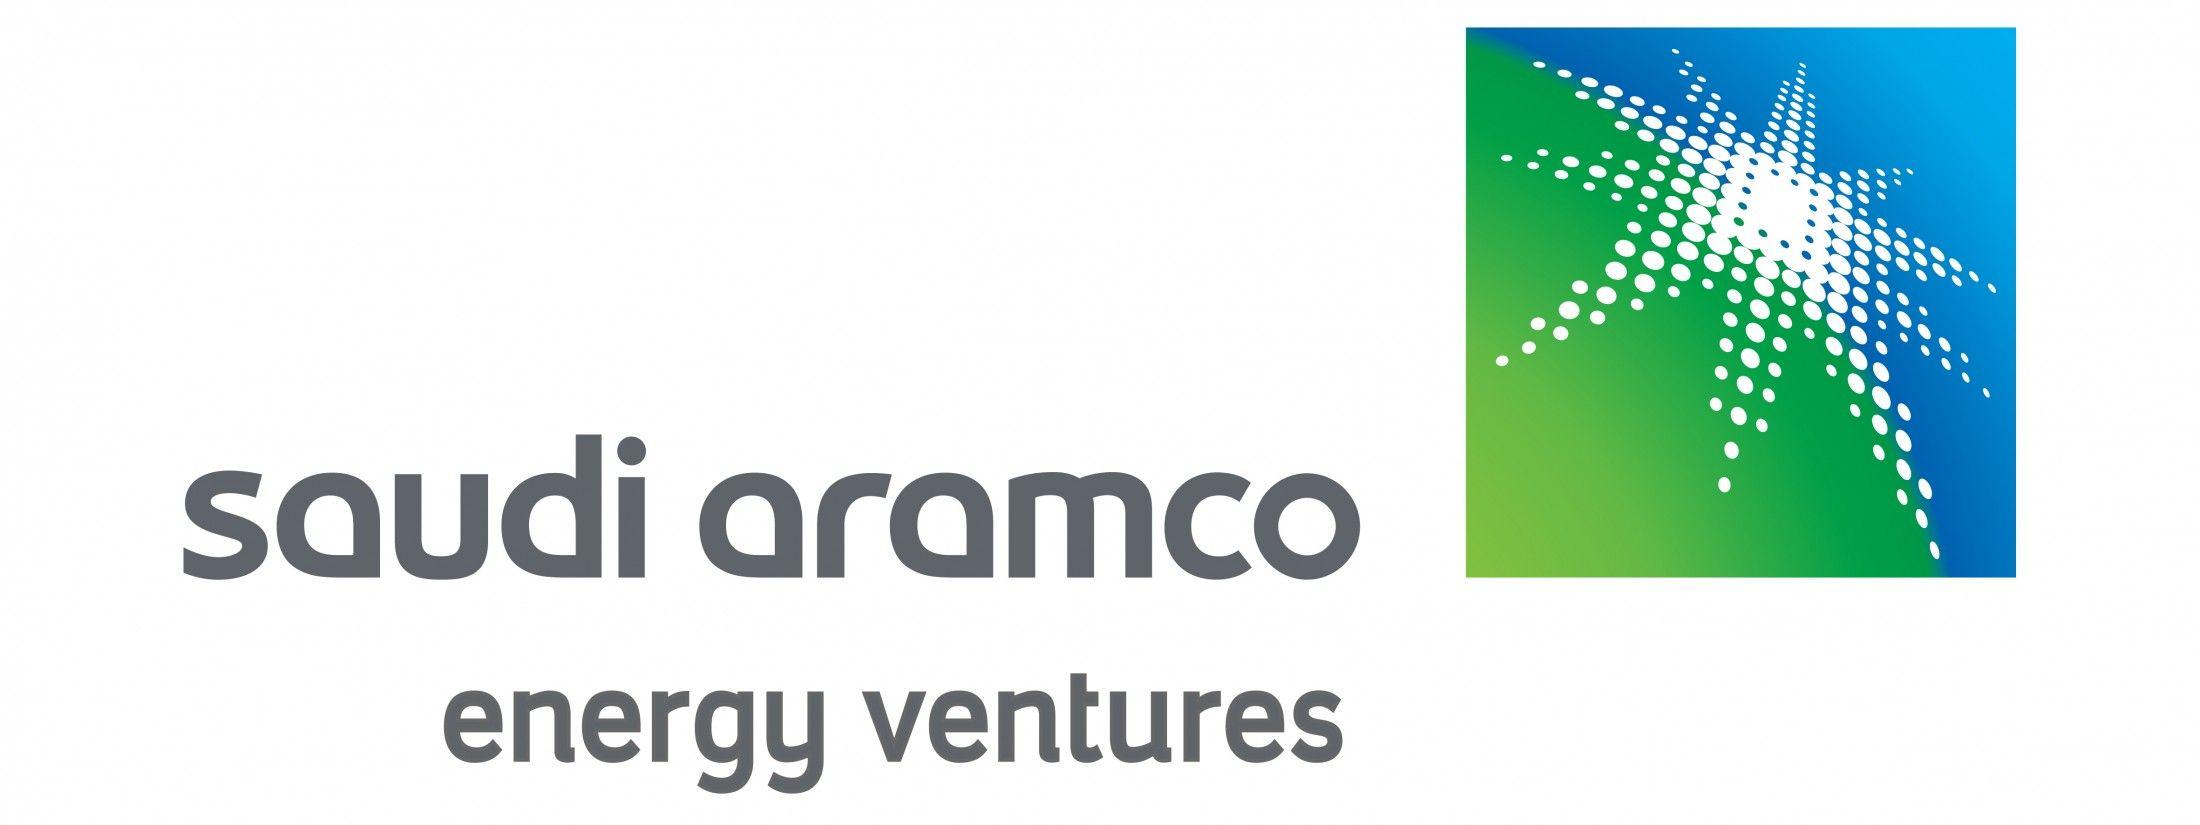 Aramco Logo - Saudi Aramco energy venture New Logo - Canadian Financing Forum